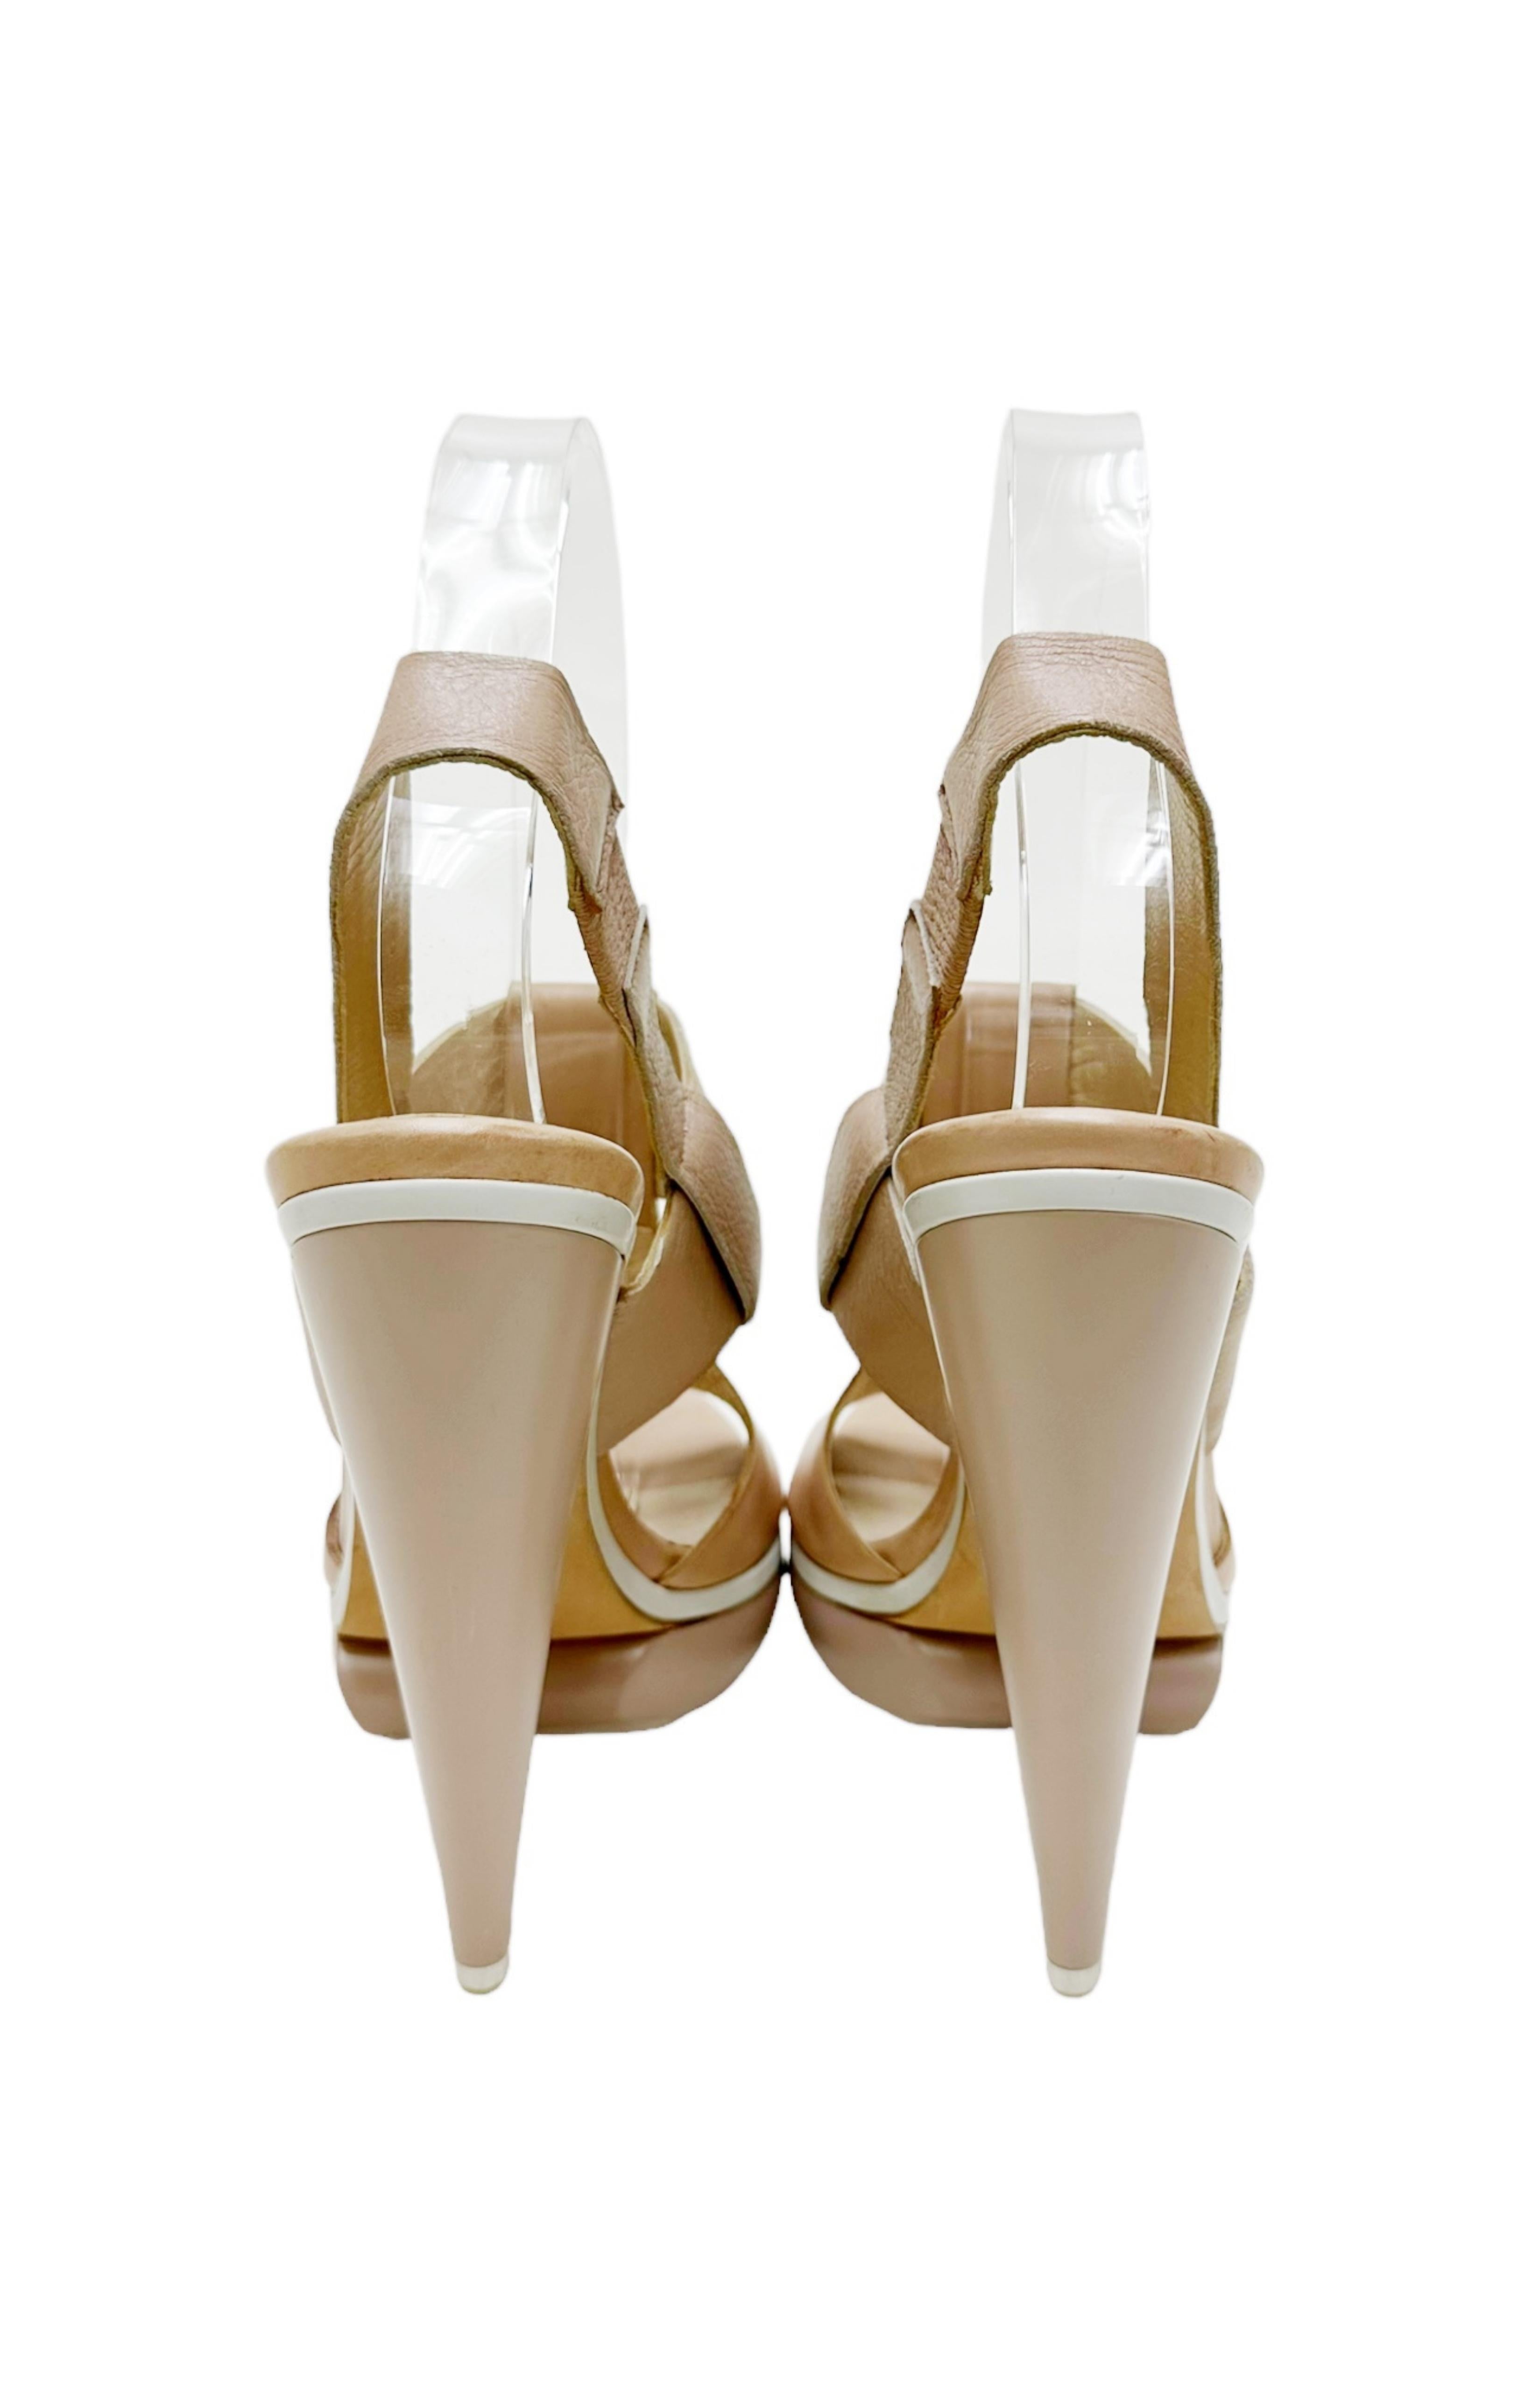 VINTAGE BALENCIAGA (RARE) Sandals Size: EUR 37 / US 6-6.5